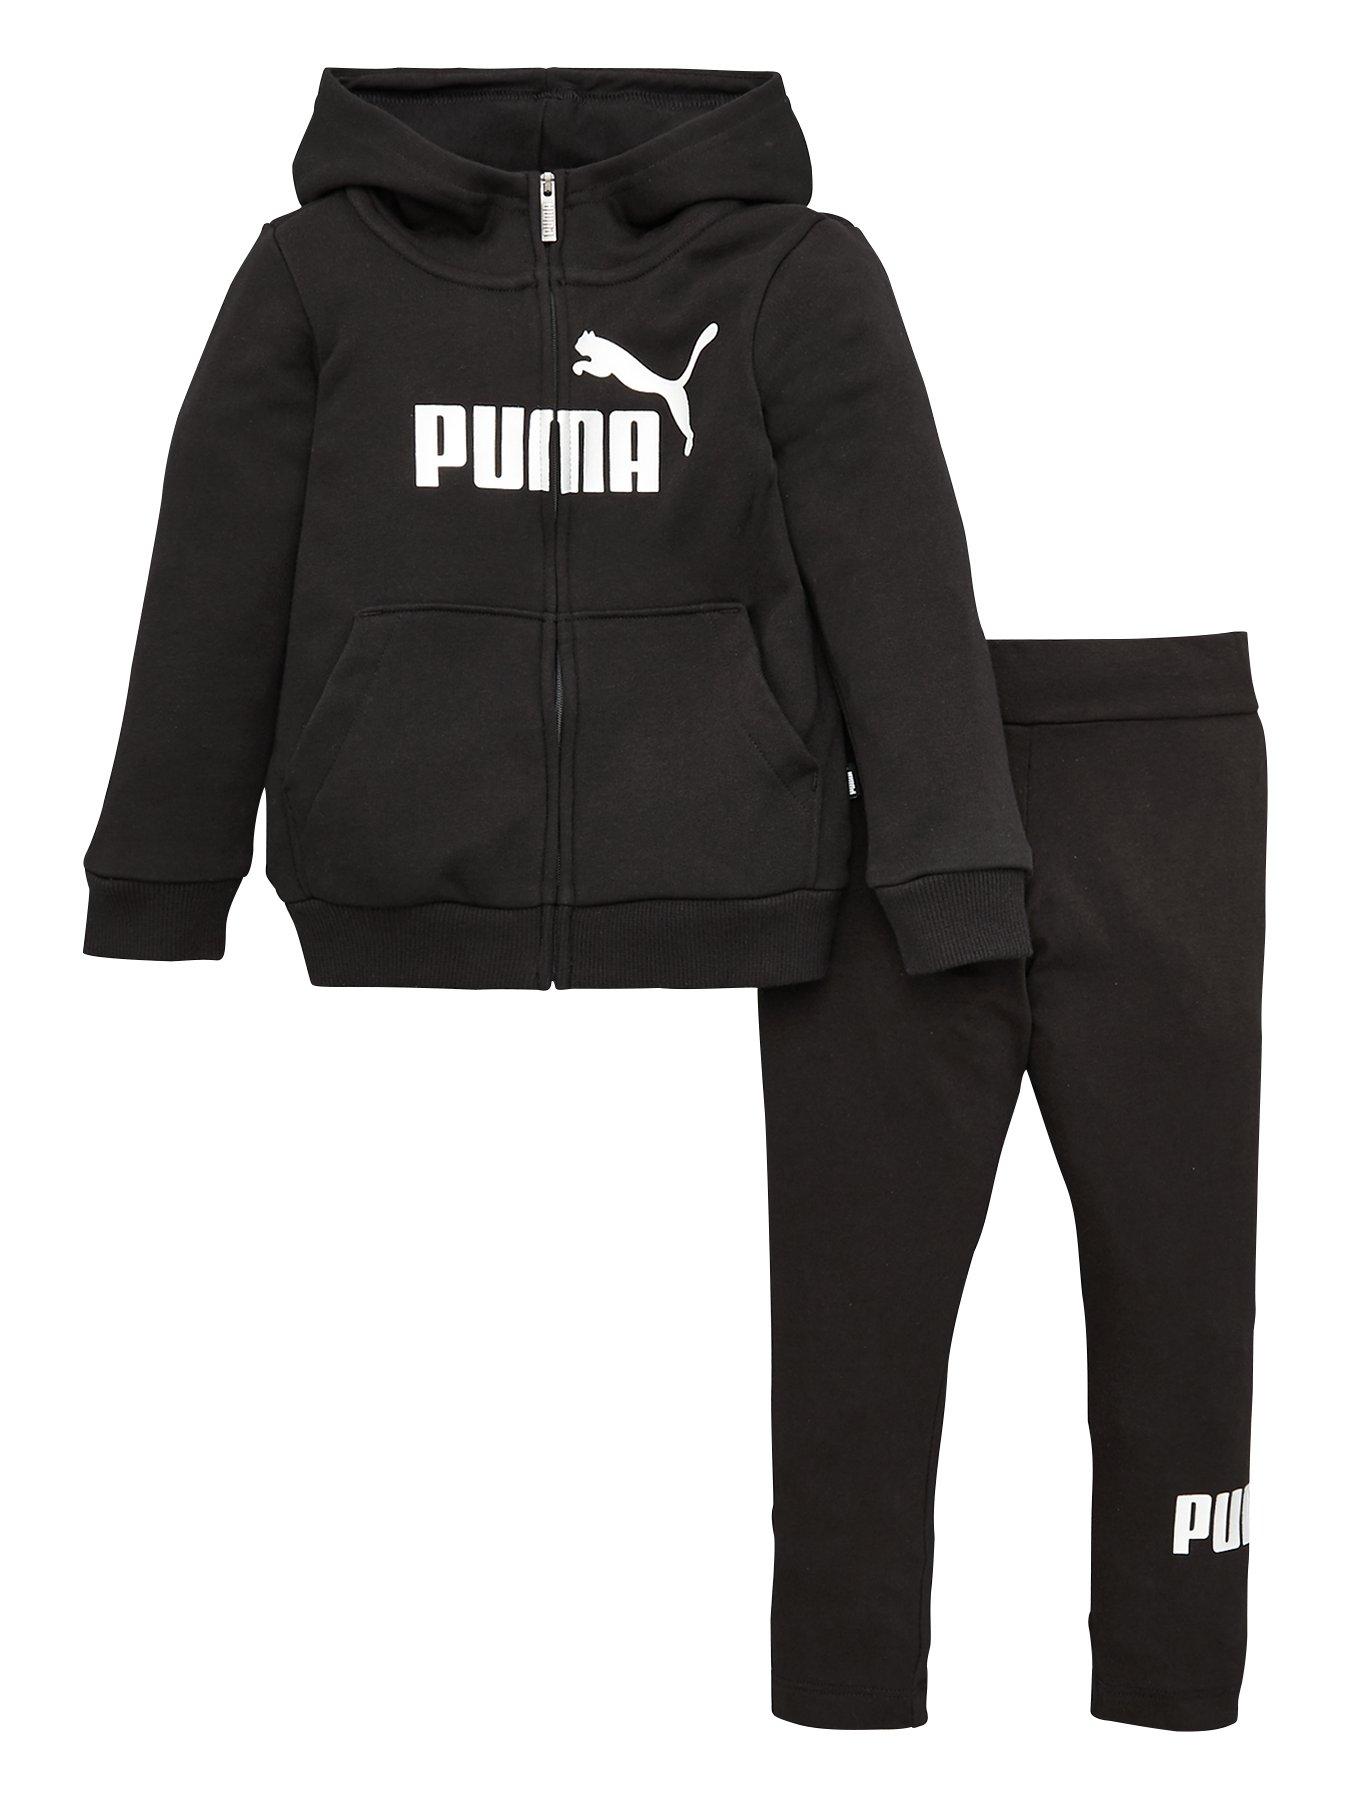 puma clothes for girl